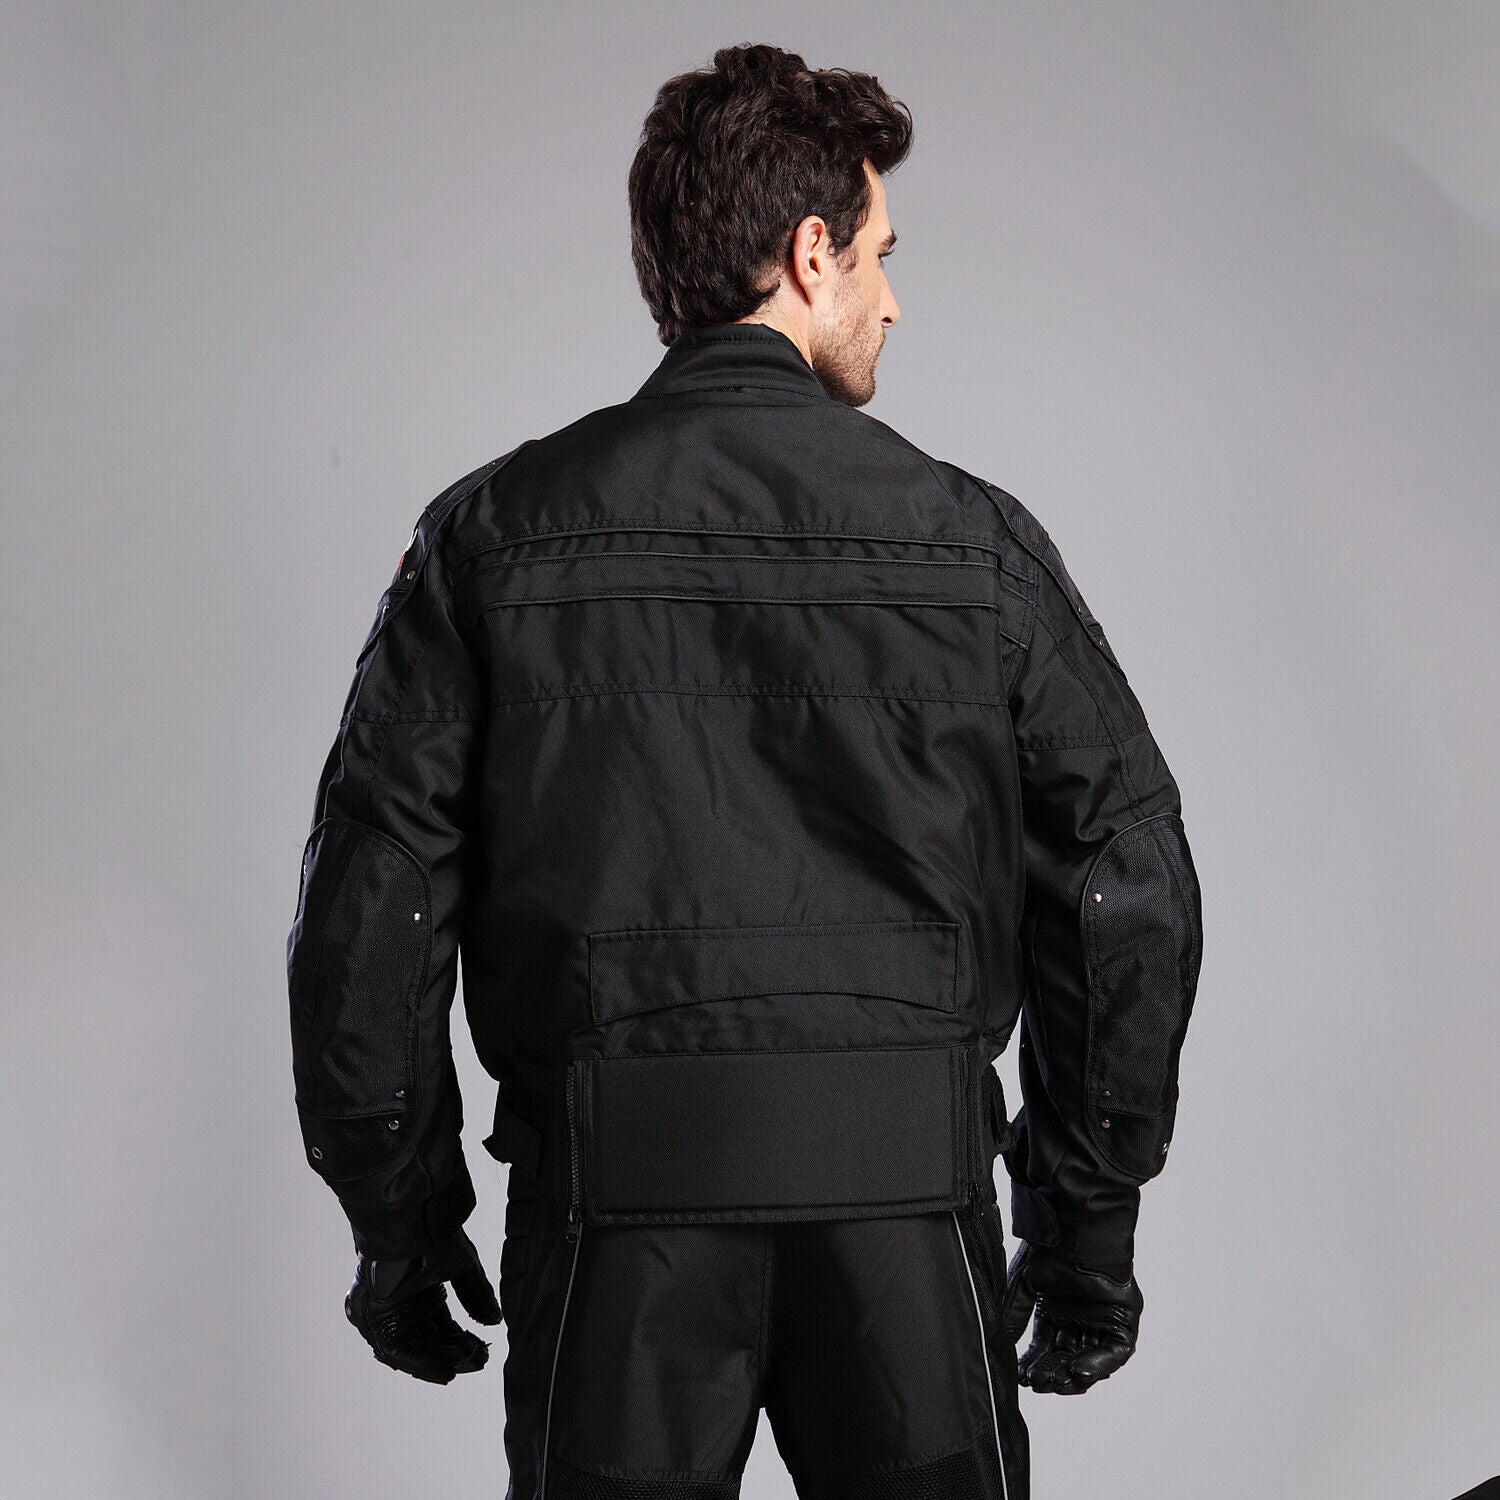 KIYOKI Men Motorcycle CE Armored Riding Jacket Removable Thermal Liner Body Protection All Seasons - KIYOKI